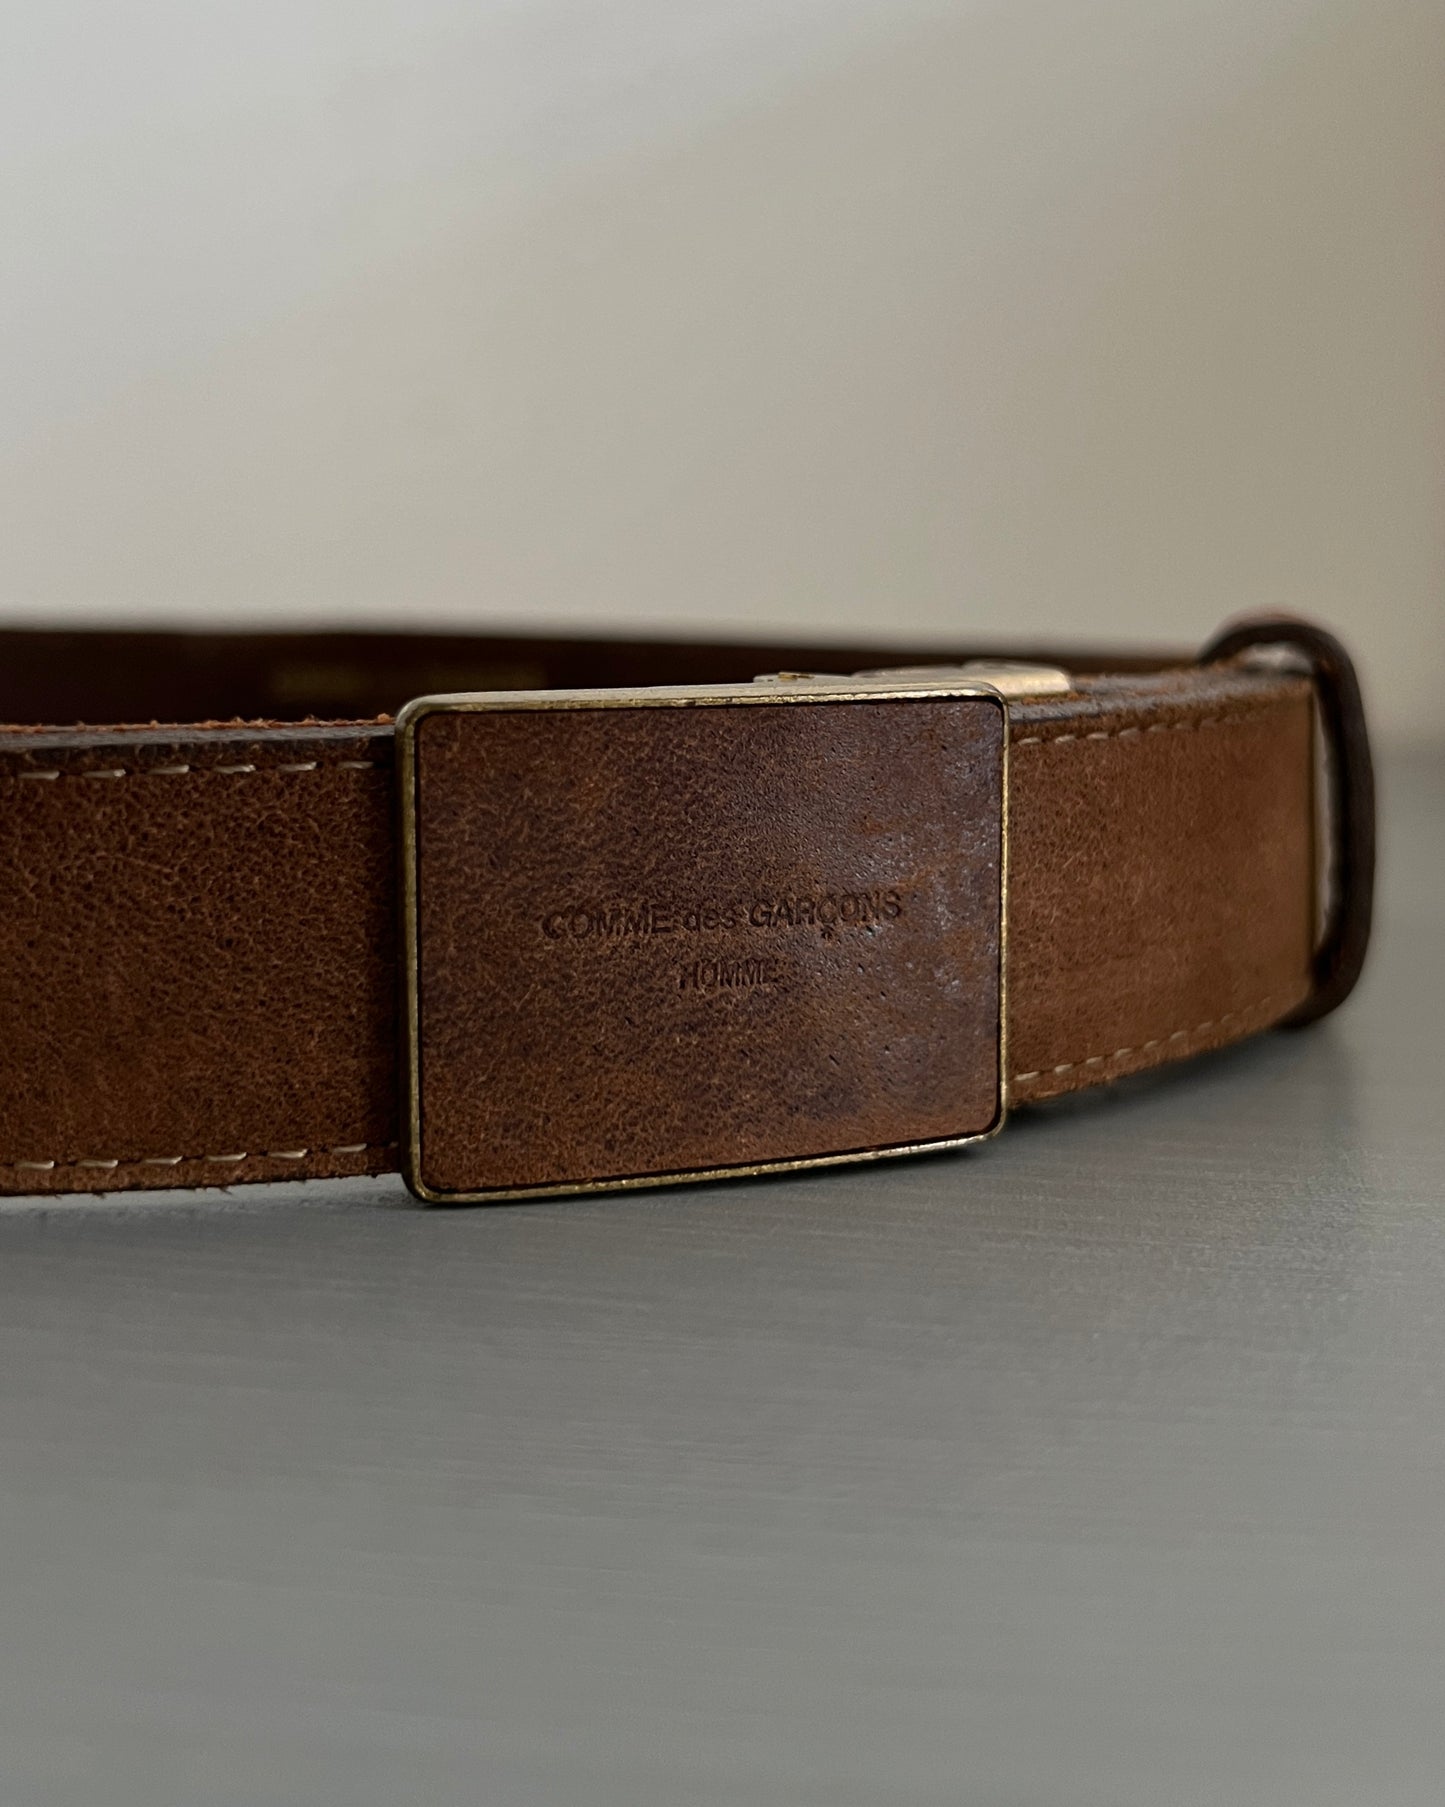 Comme Des Garcons Homme 1990s Leather Belt - One Size